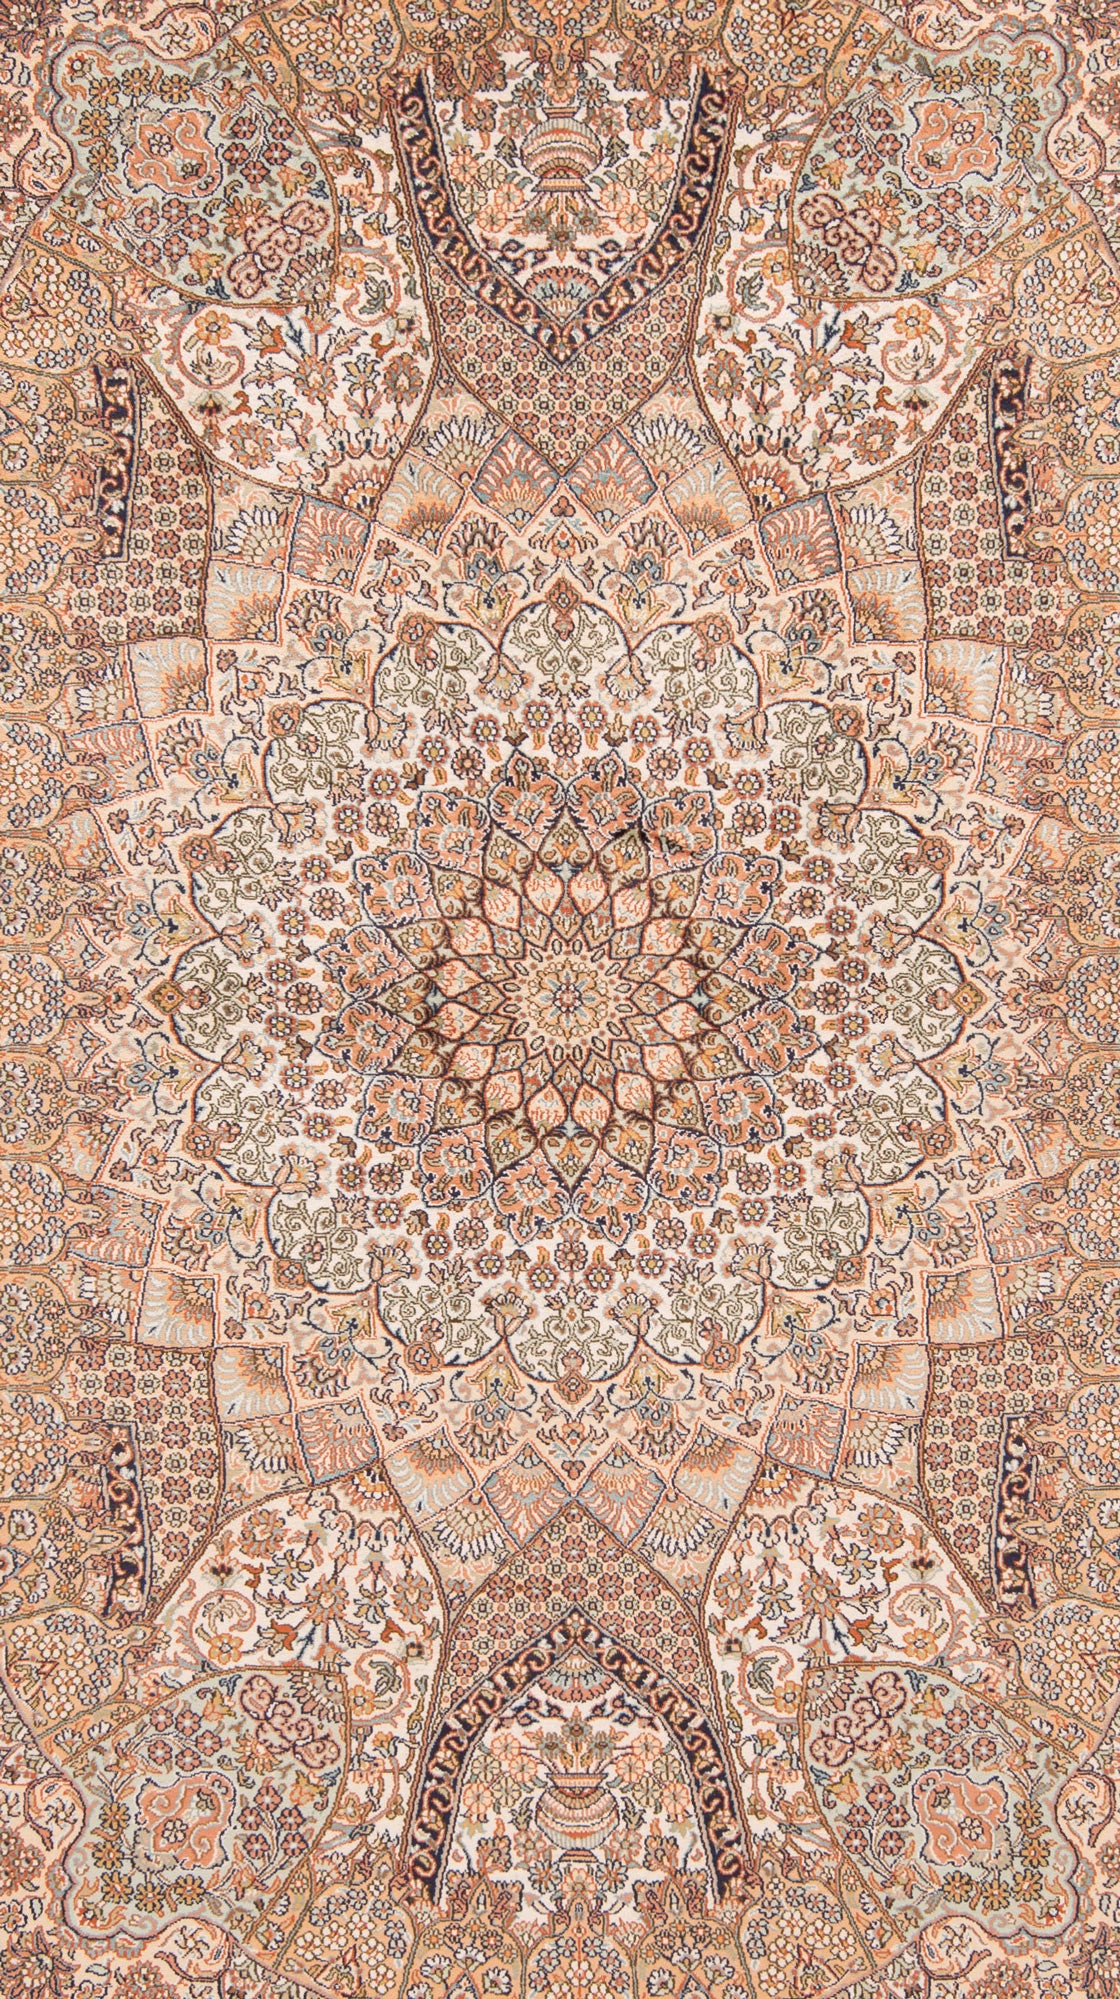 Seda da Caxemira Pura | 250 x 172 cm